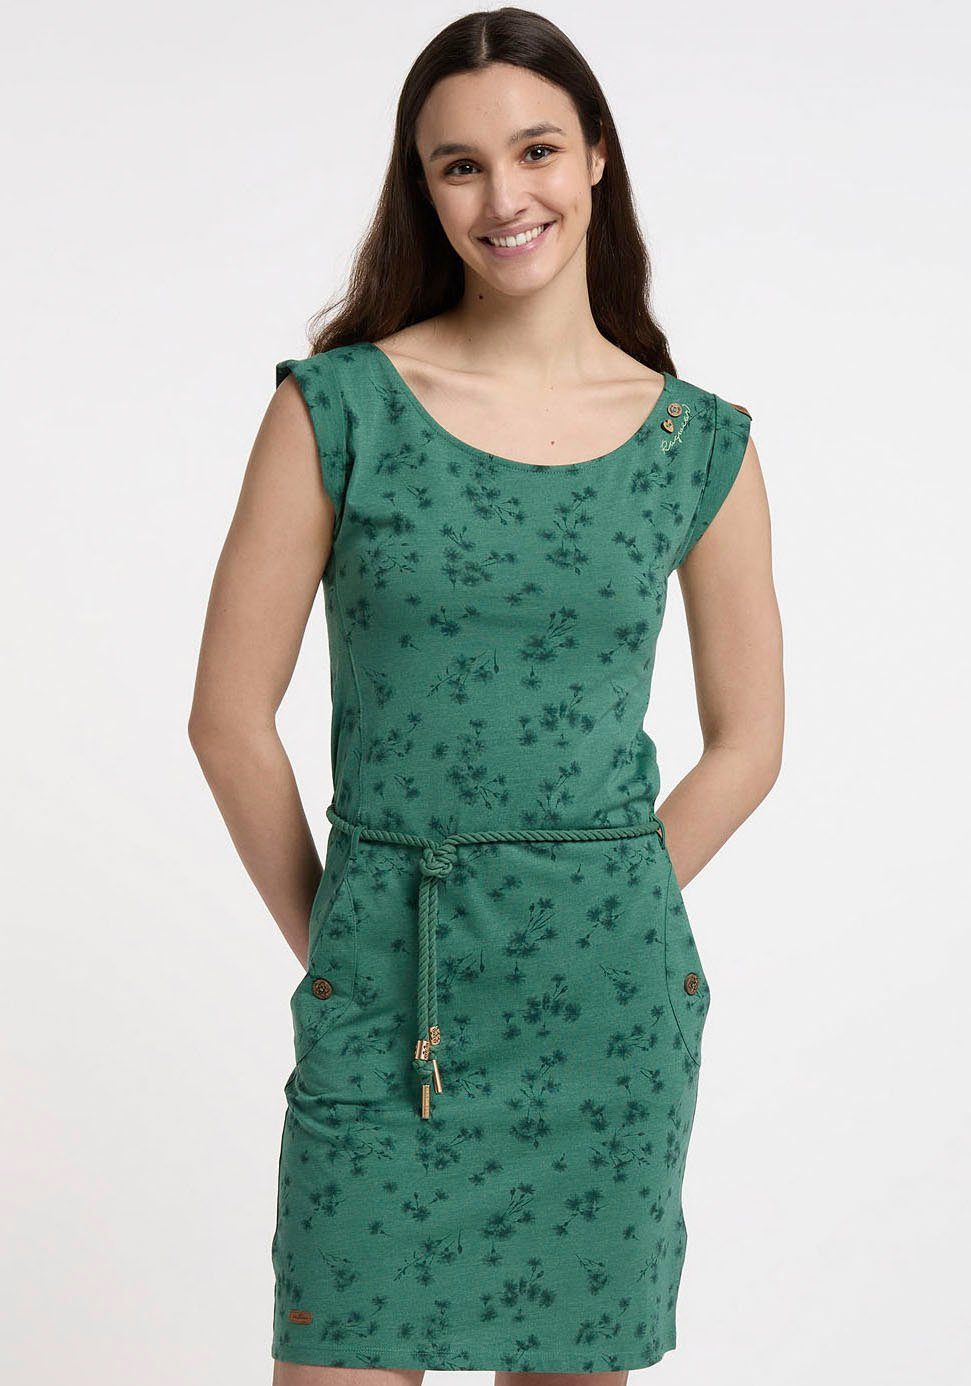 Ragwear Jerseykleid im TAGG green Allover-Print BLUETE 5023 floralen